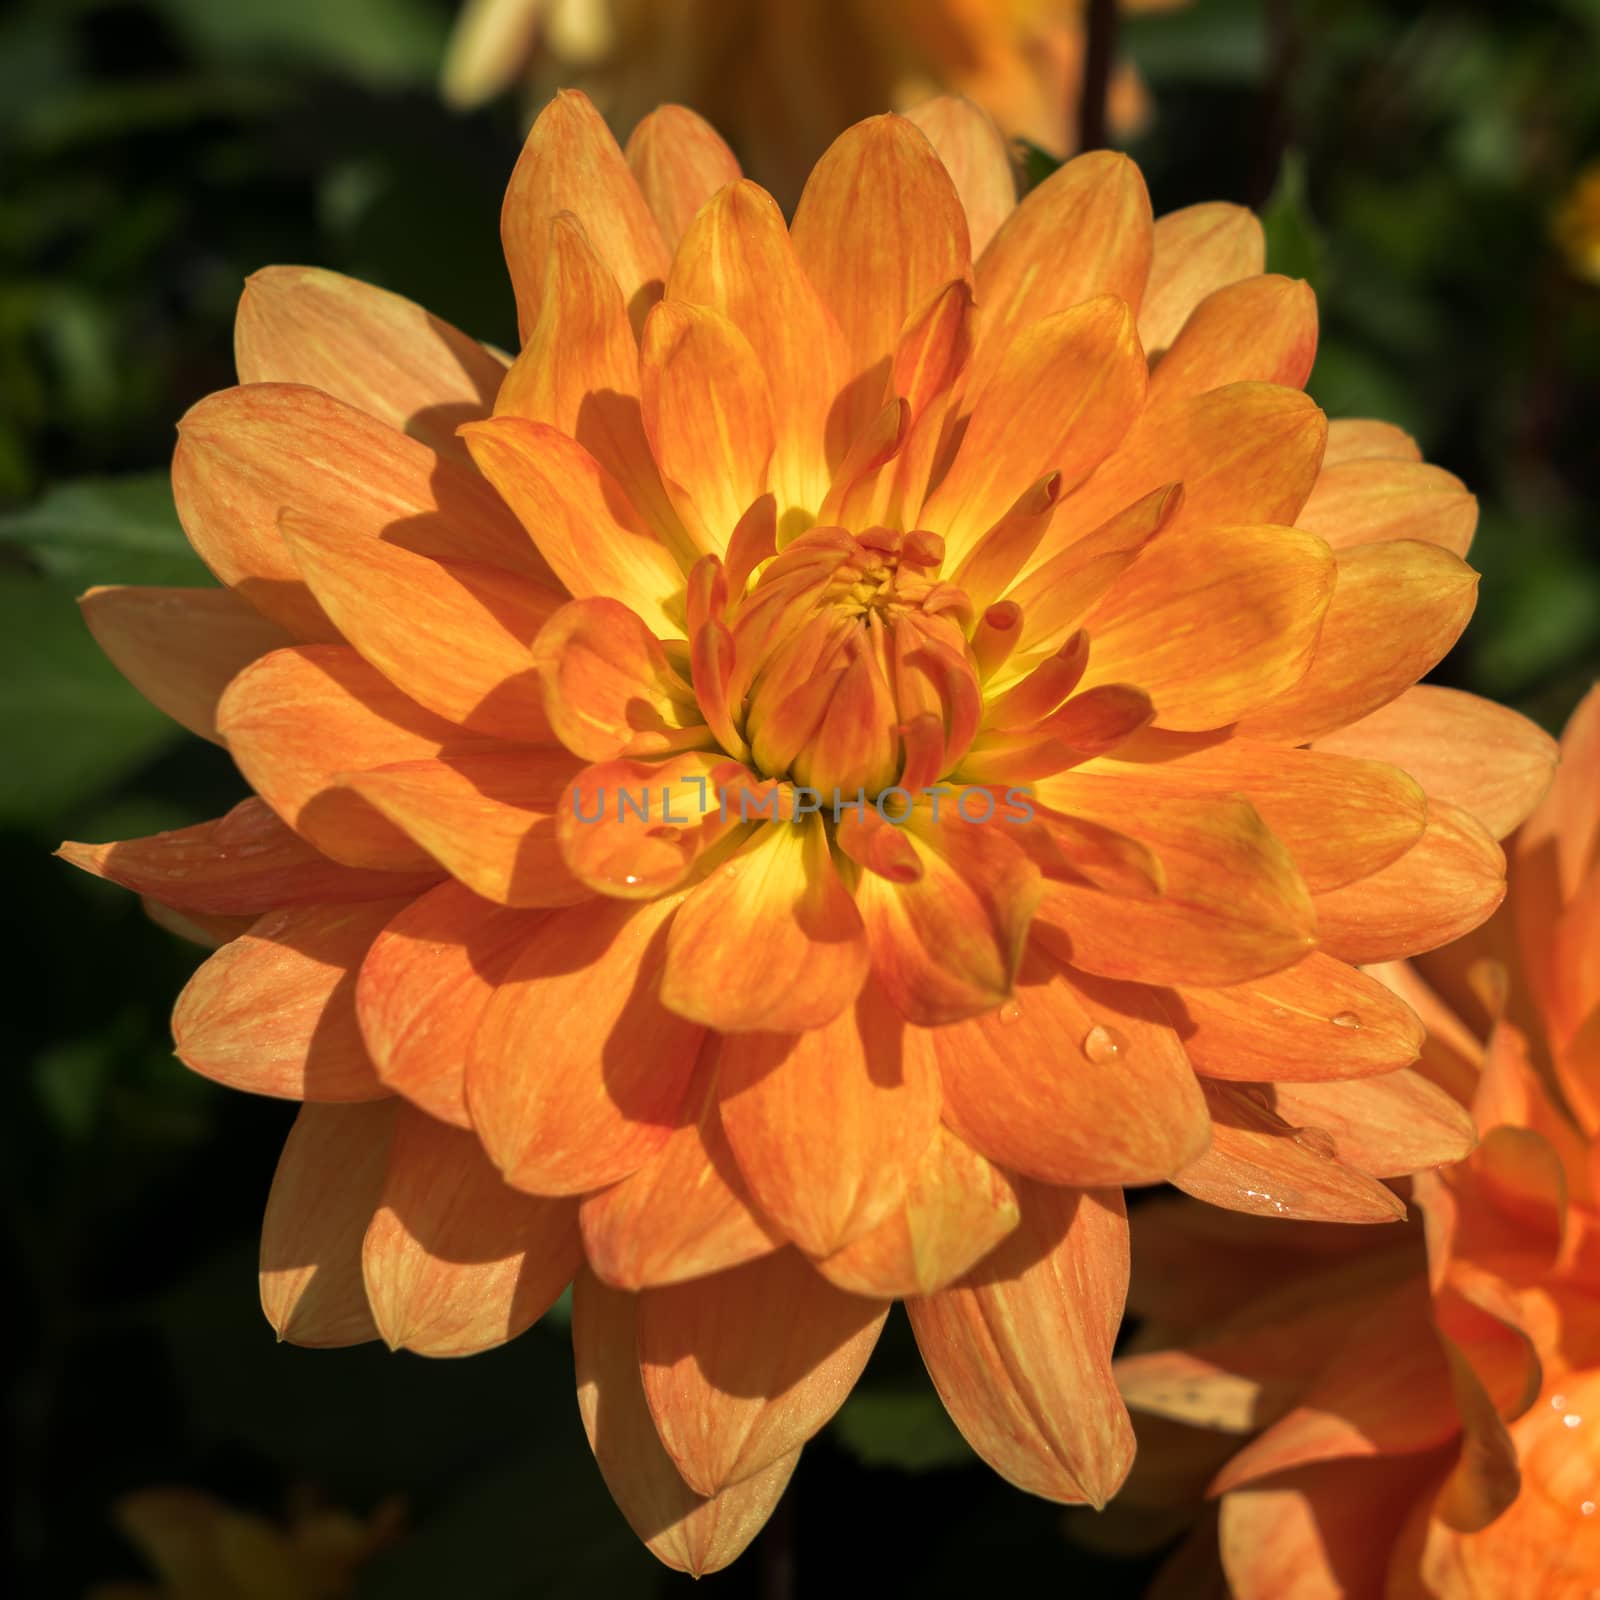 Orange Dahlia in Full Bloom by phil_bird